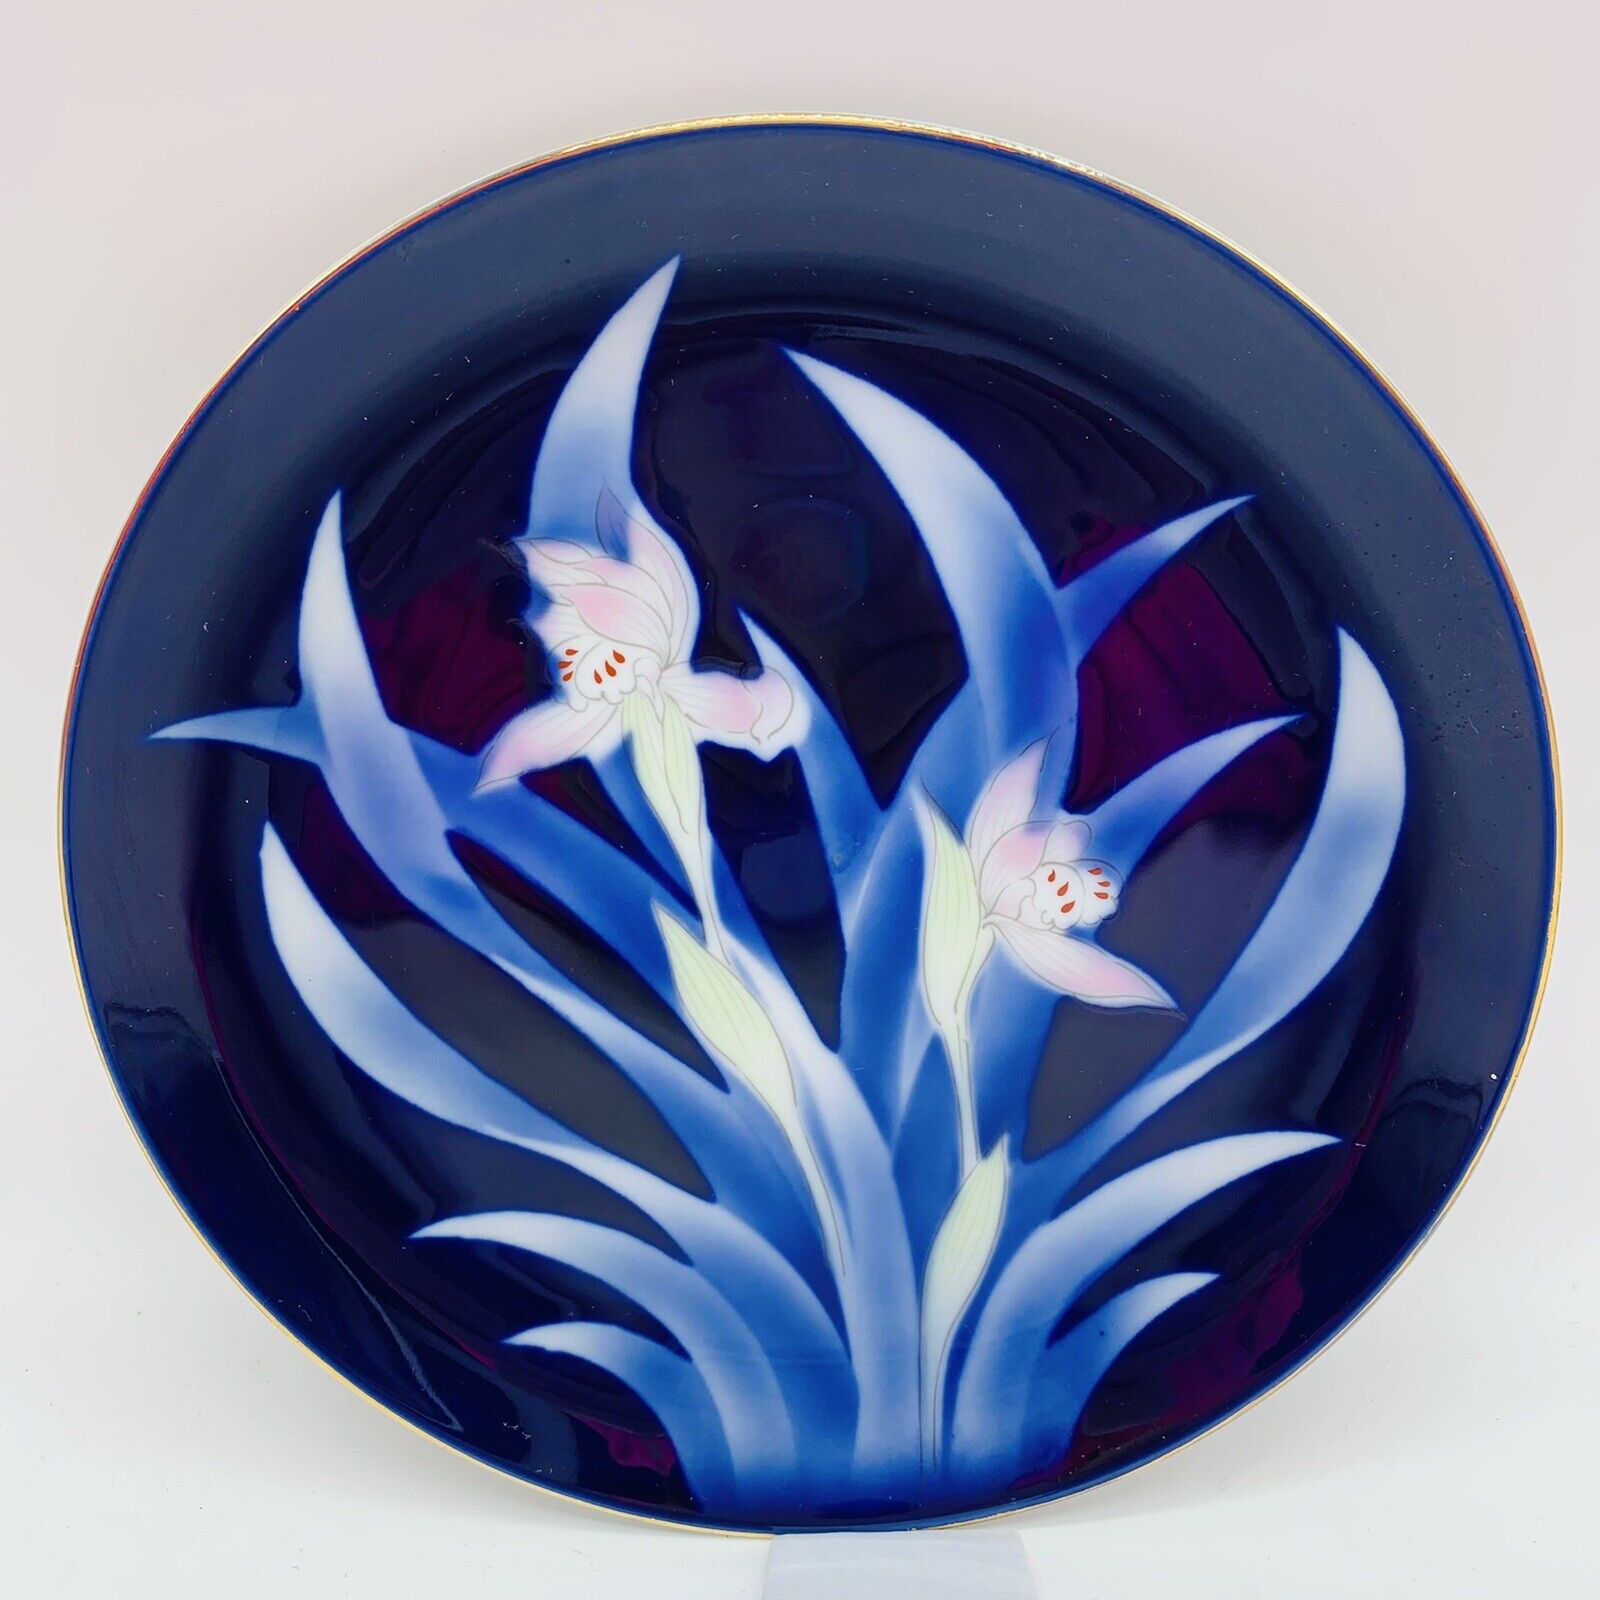 Sato Gordon Collection Japan Decor Plate Cobalt Blue with Iris 8.25” Round